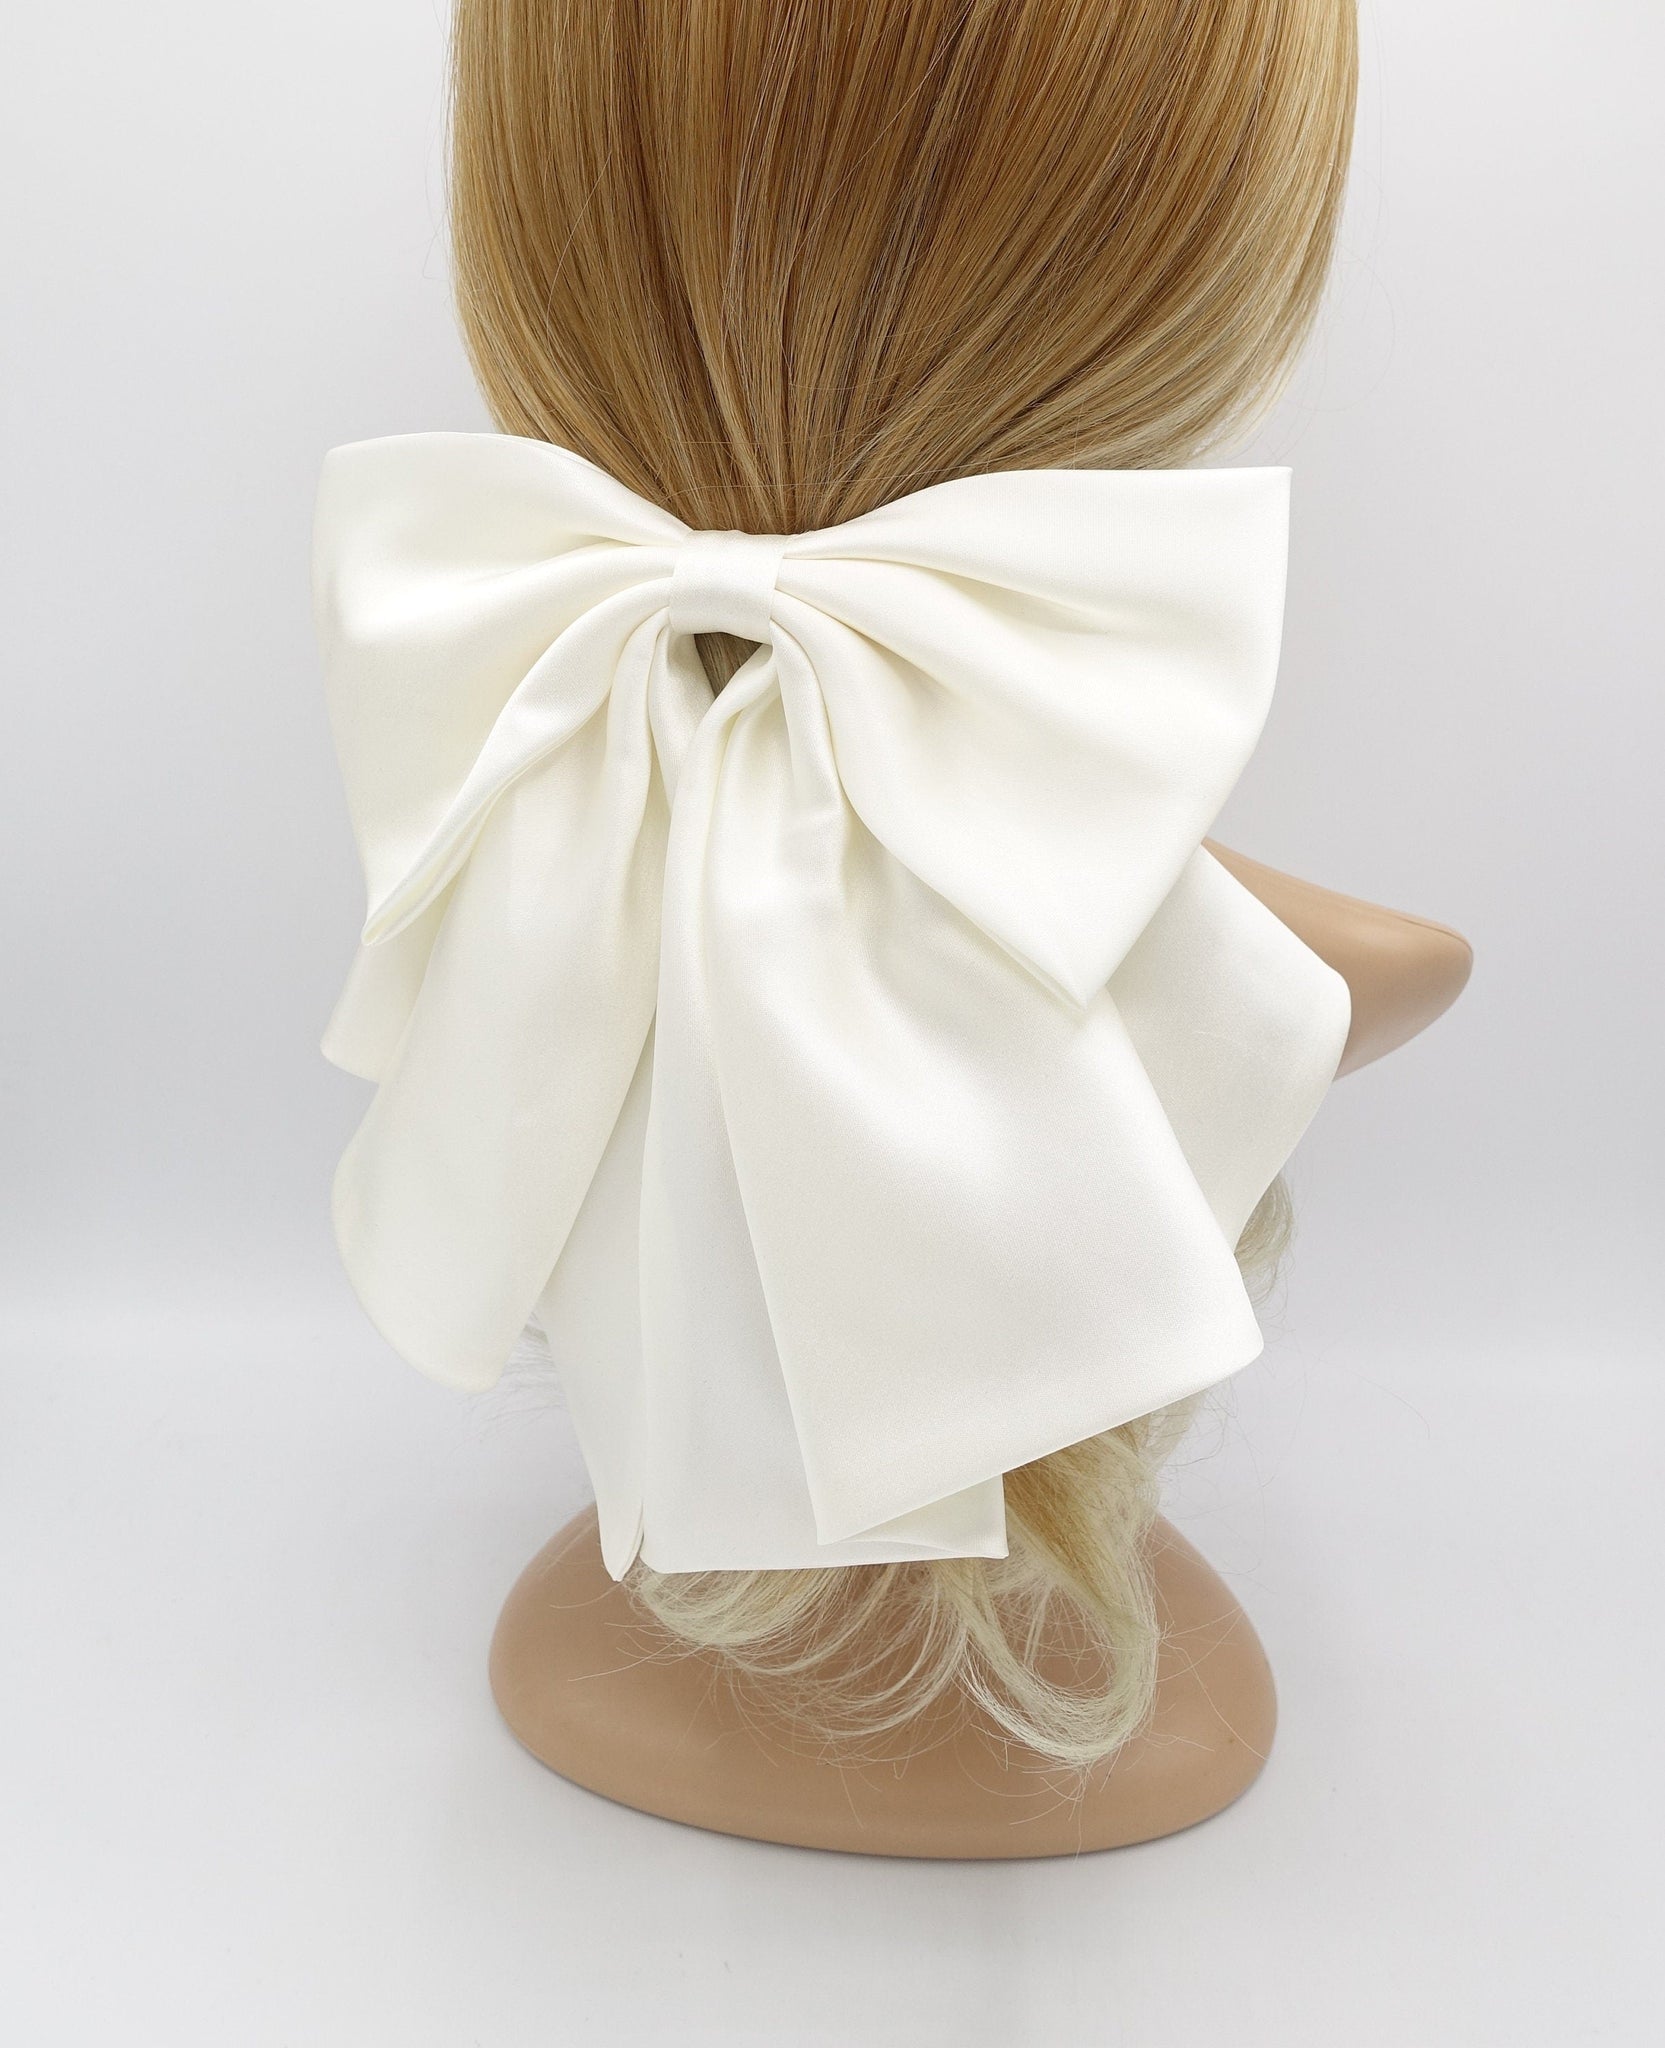 veryshine.com Barrette (Bow) Cream white satin suit hair bow classic hair accessory for women